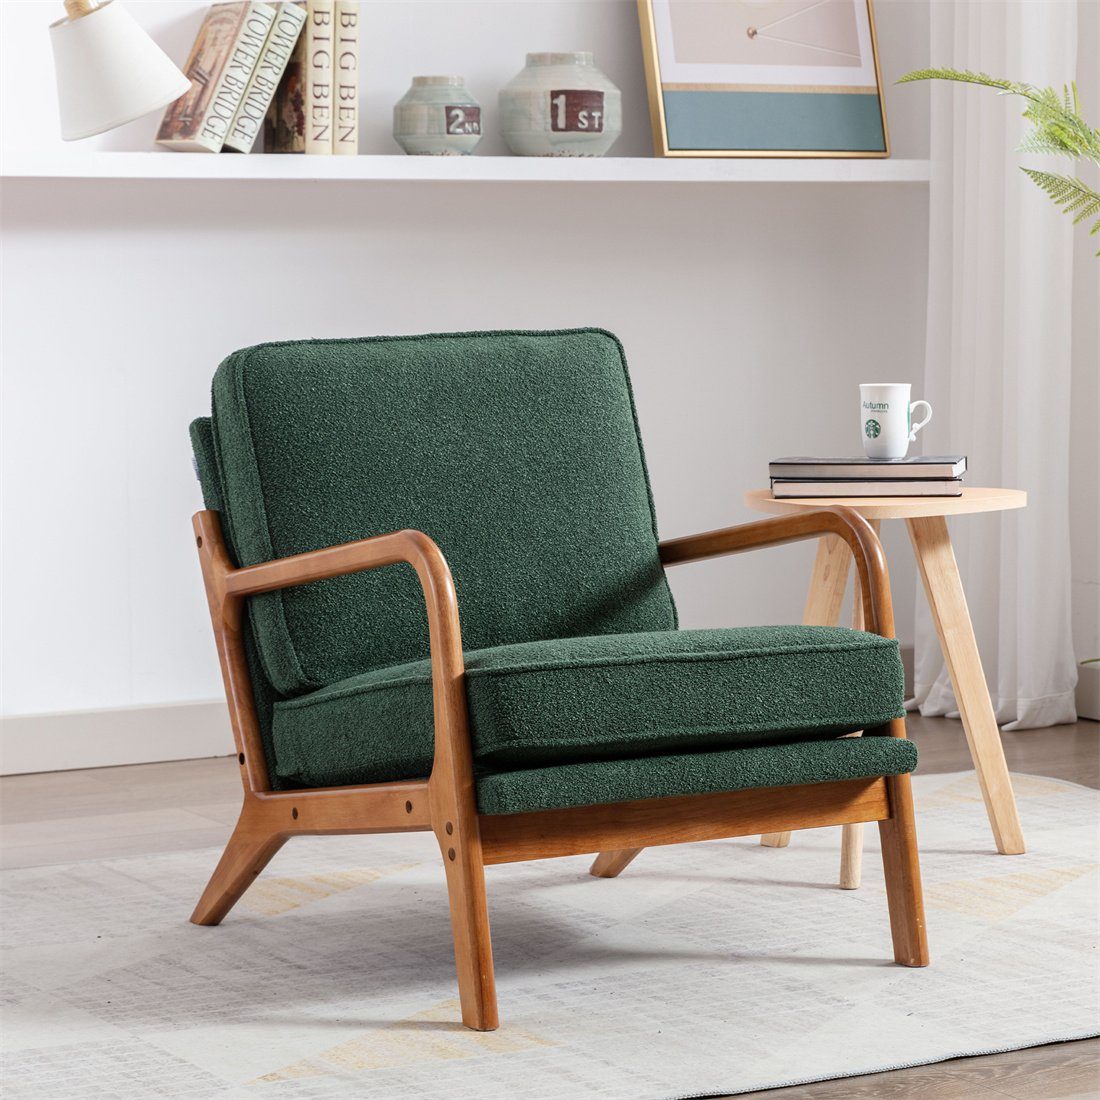 DÖRÖY Polsterstuhl Holzgestell Sessel, Moderner Dekorativer Stuhl Wohnzimmer Lounge Stuhl